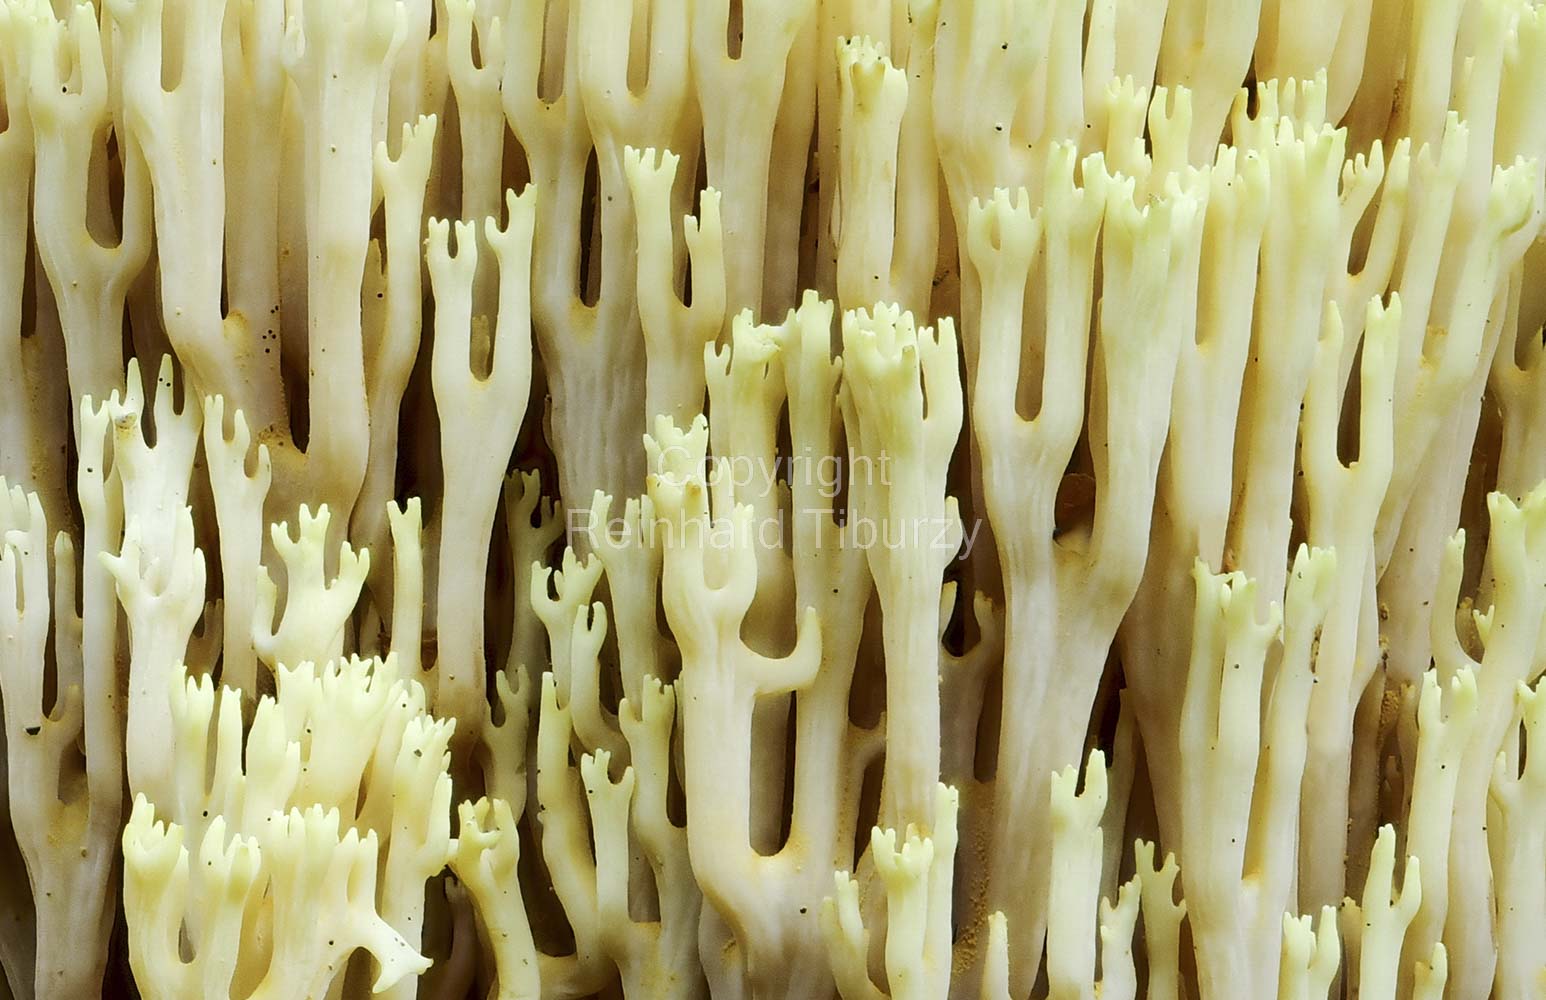 coral_fungus